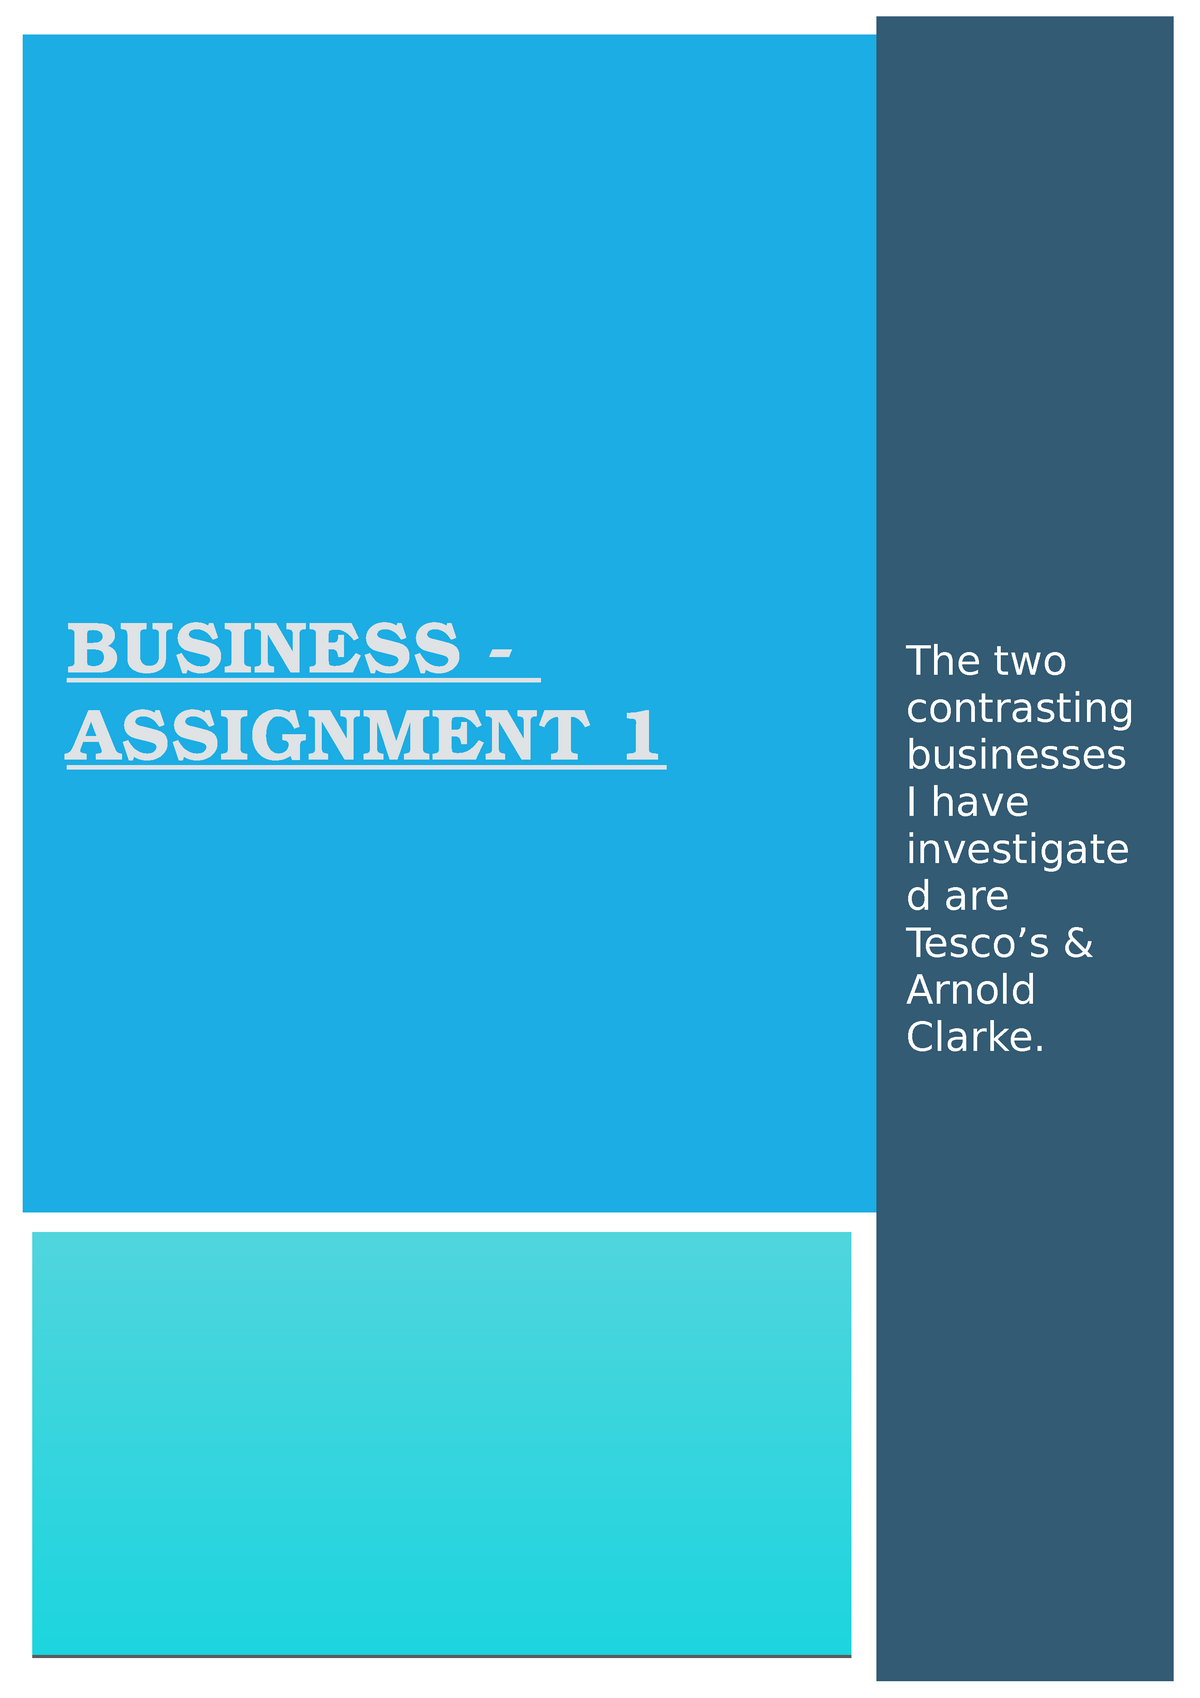 assignment 4 business 100